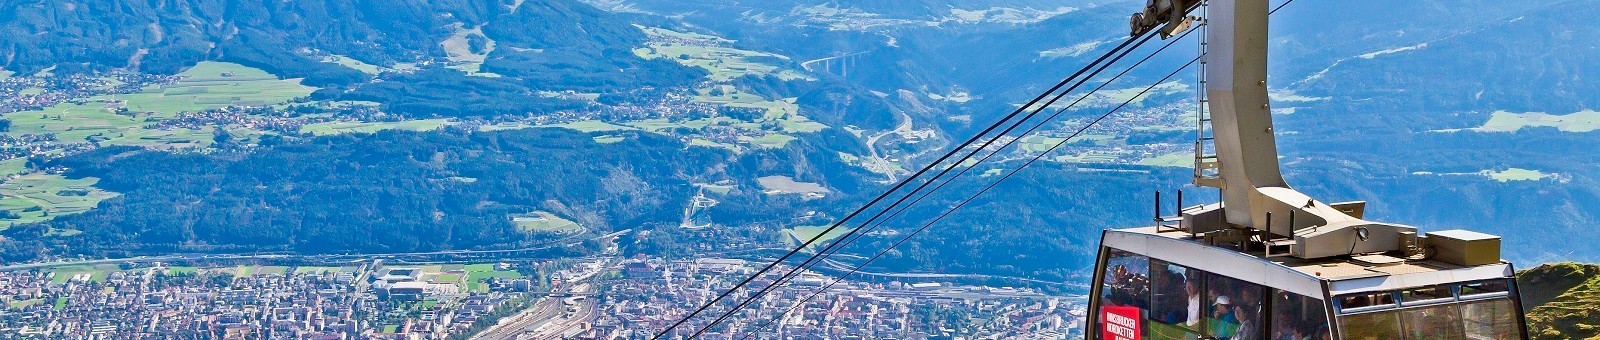     Nordkettenbahn Cable Car in Innsbruck 